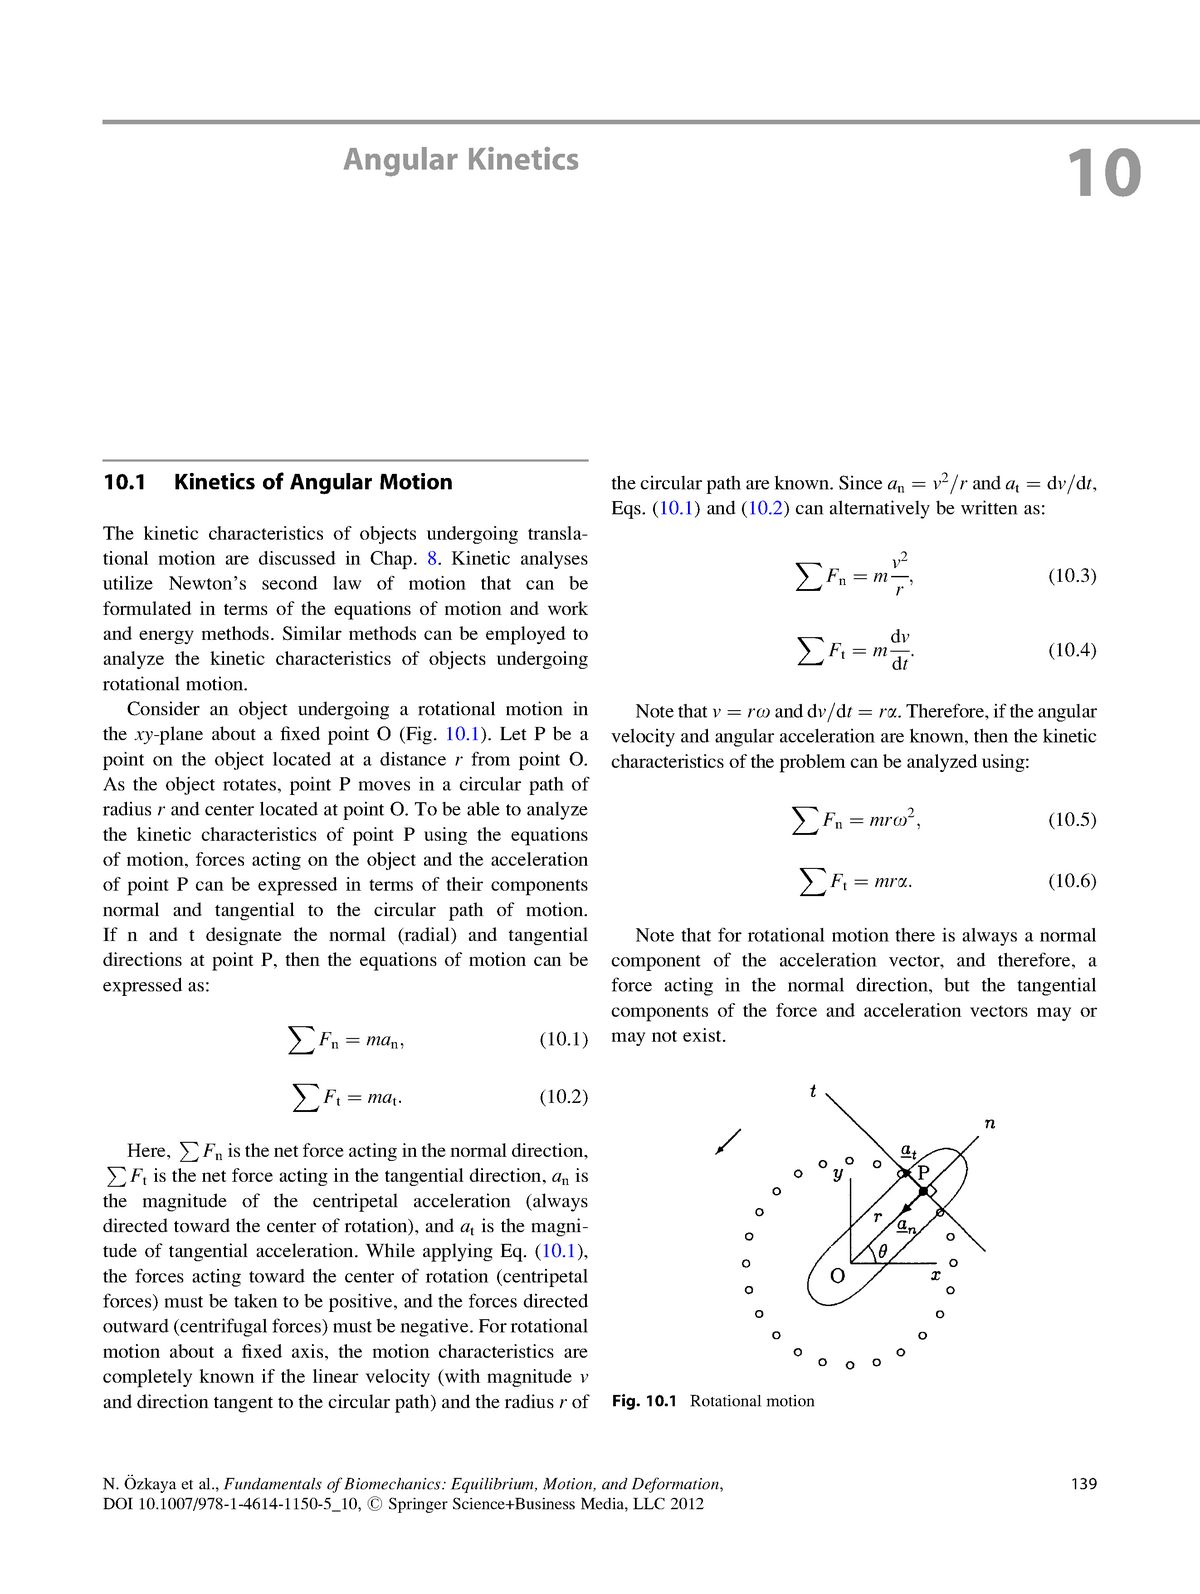 Fundamentals of Biomechanics Equilibrium Motion and Deformation 3rd Edpart5 Angular